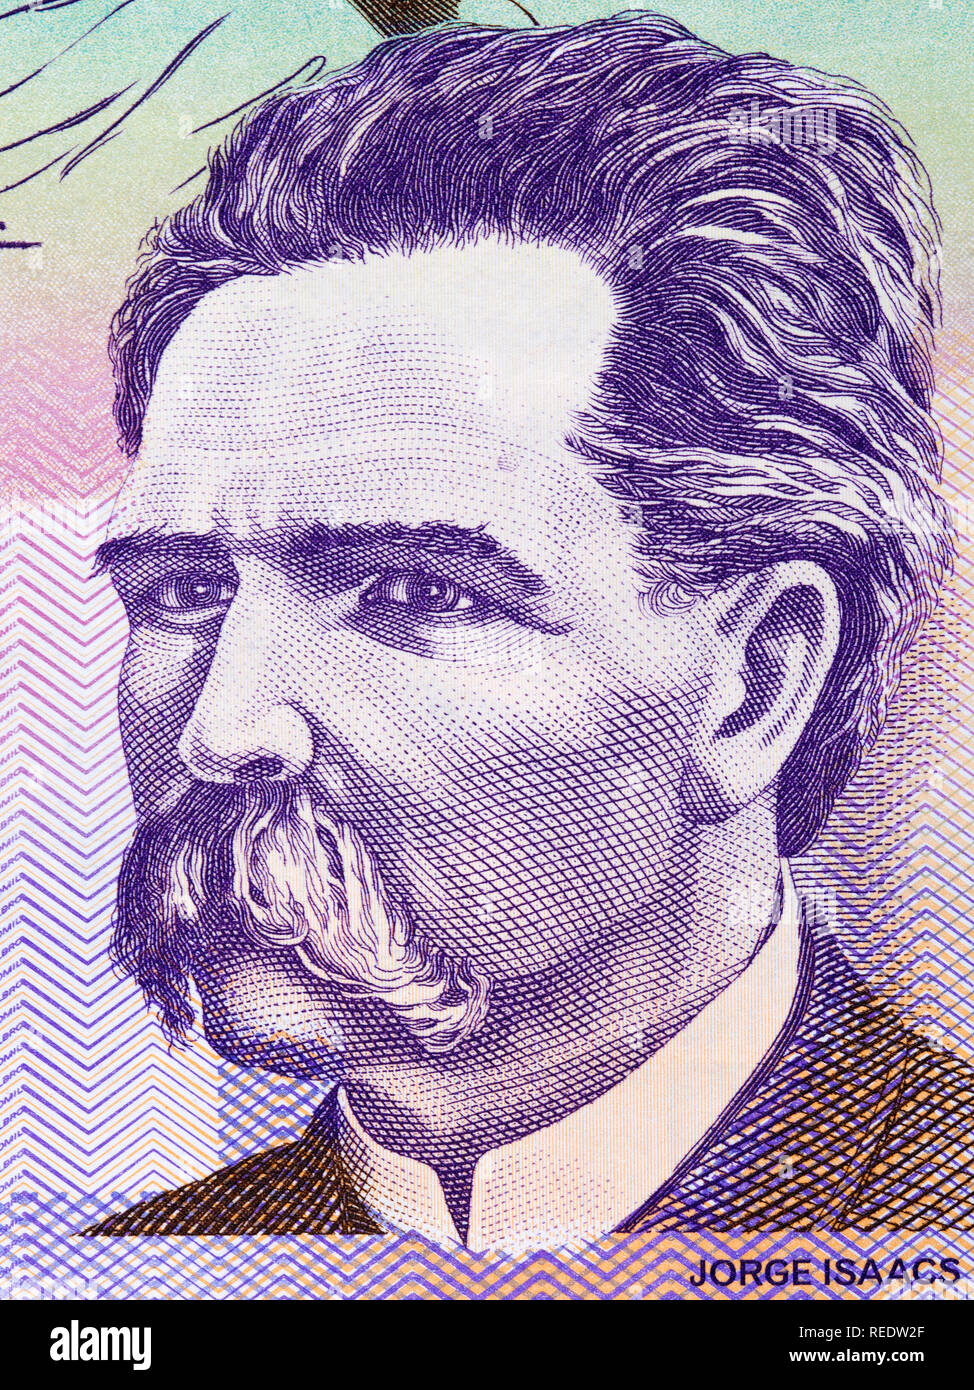 Jorge Isaacs Ferrer Portrait von kolumbianischen Geld Stockfoto